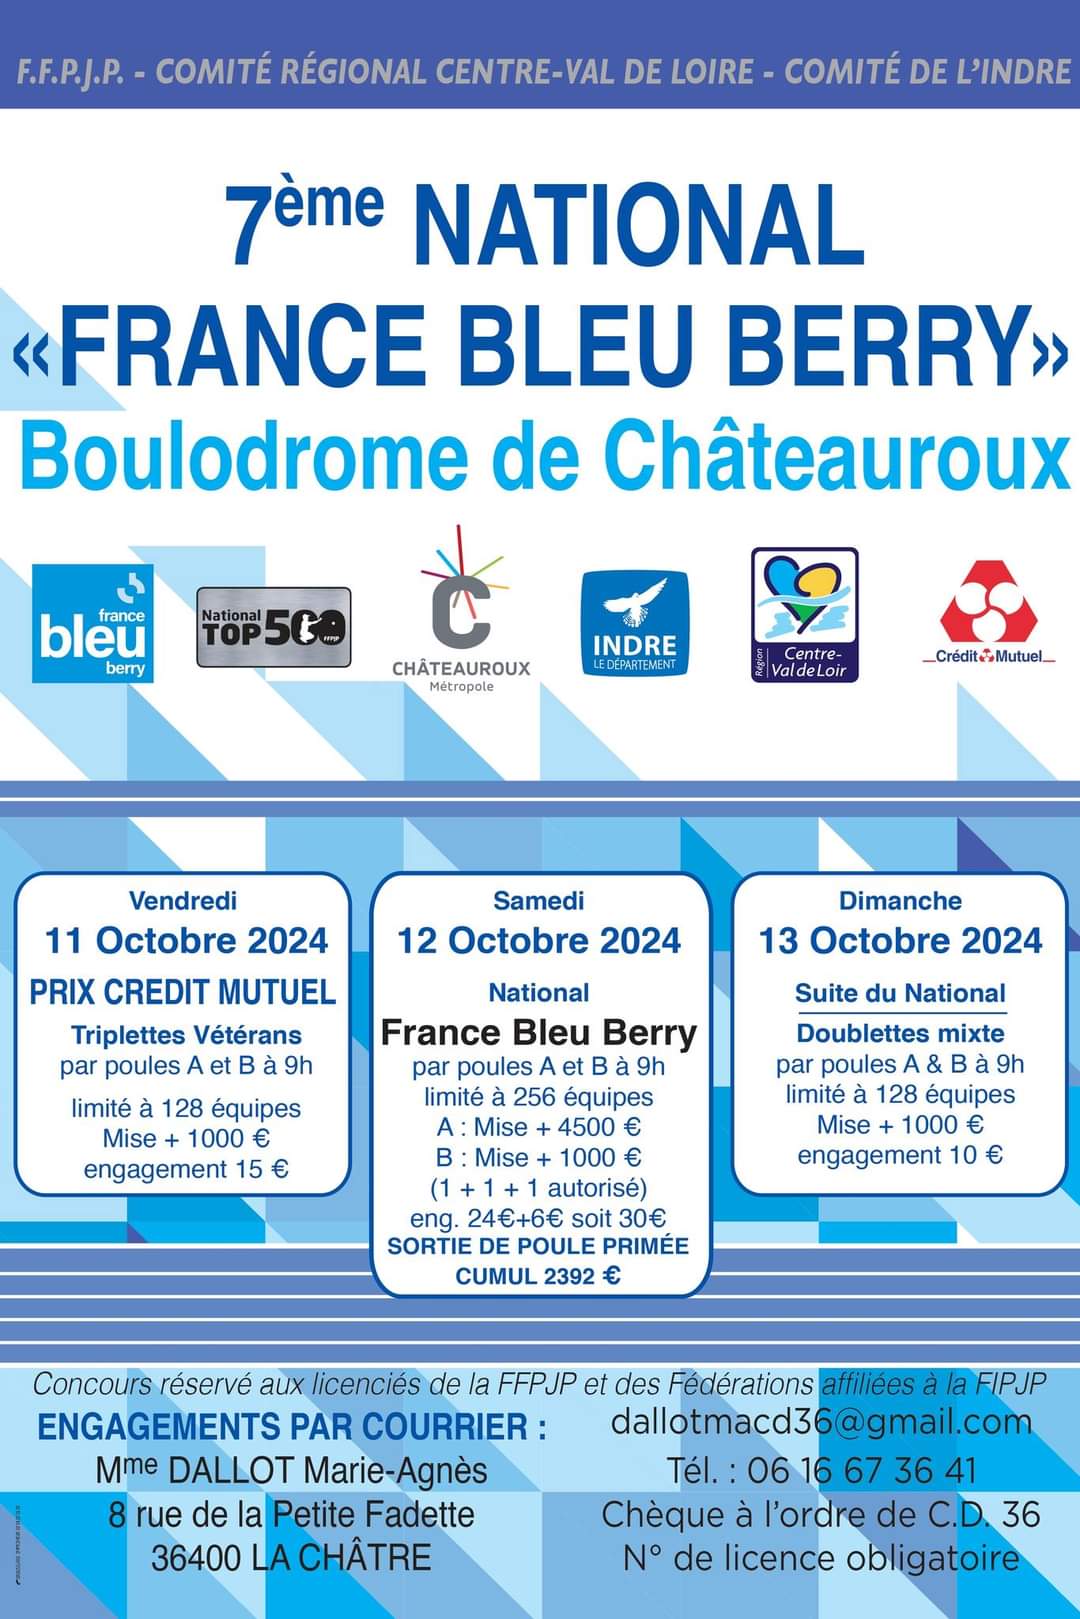 7e National France Bleu Berry